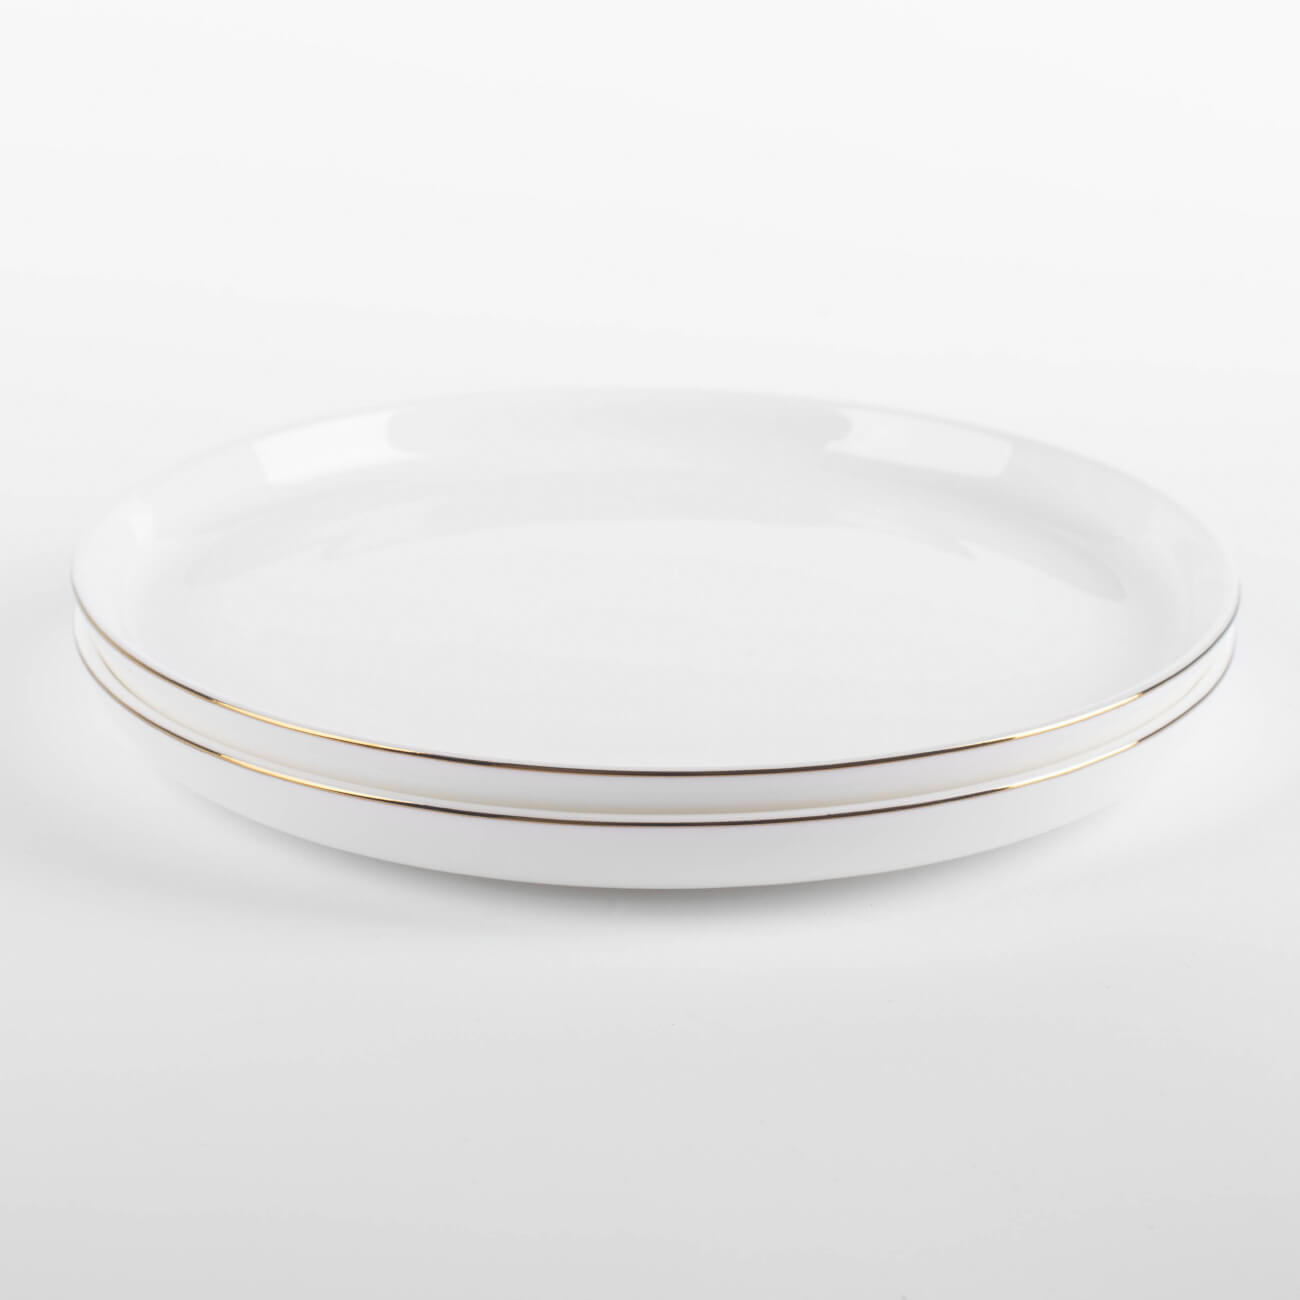 Тарелка десертная, 20 см, 2 шт, фарфор F, белая, Ideal gold тарелка десертная luminarc loft abacco 22 см